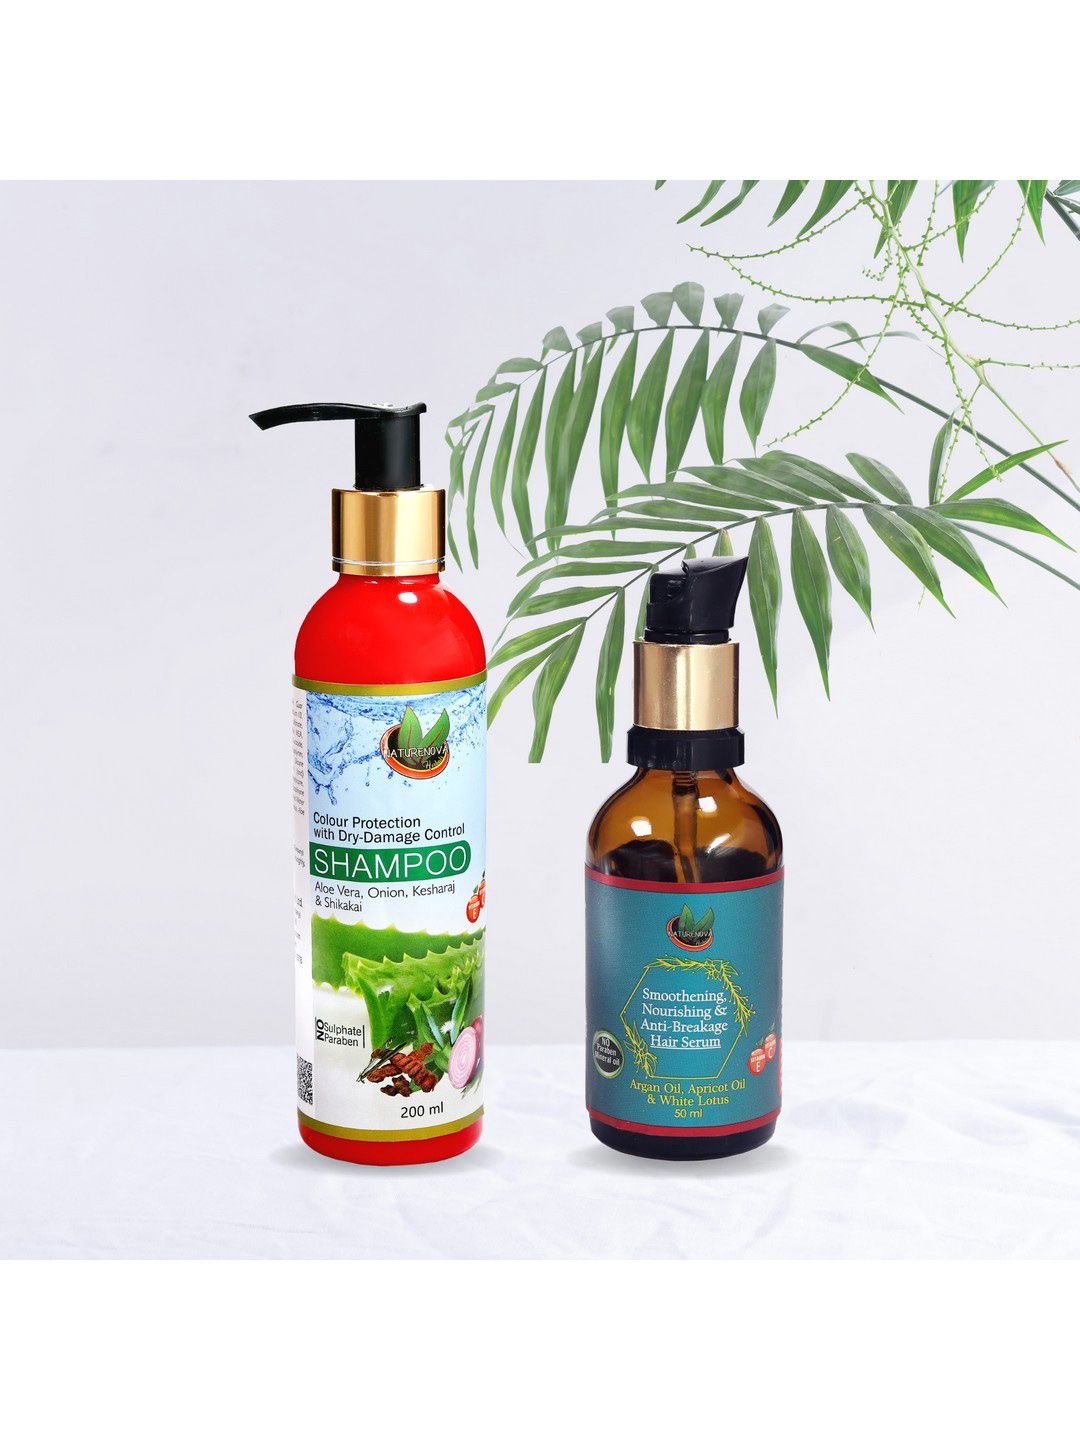 NatureNova Herbals Set of 2 Color Protect Shampoo & Hair Serum Price in India